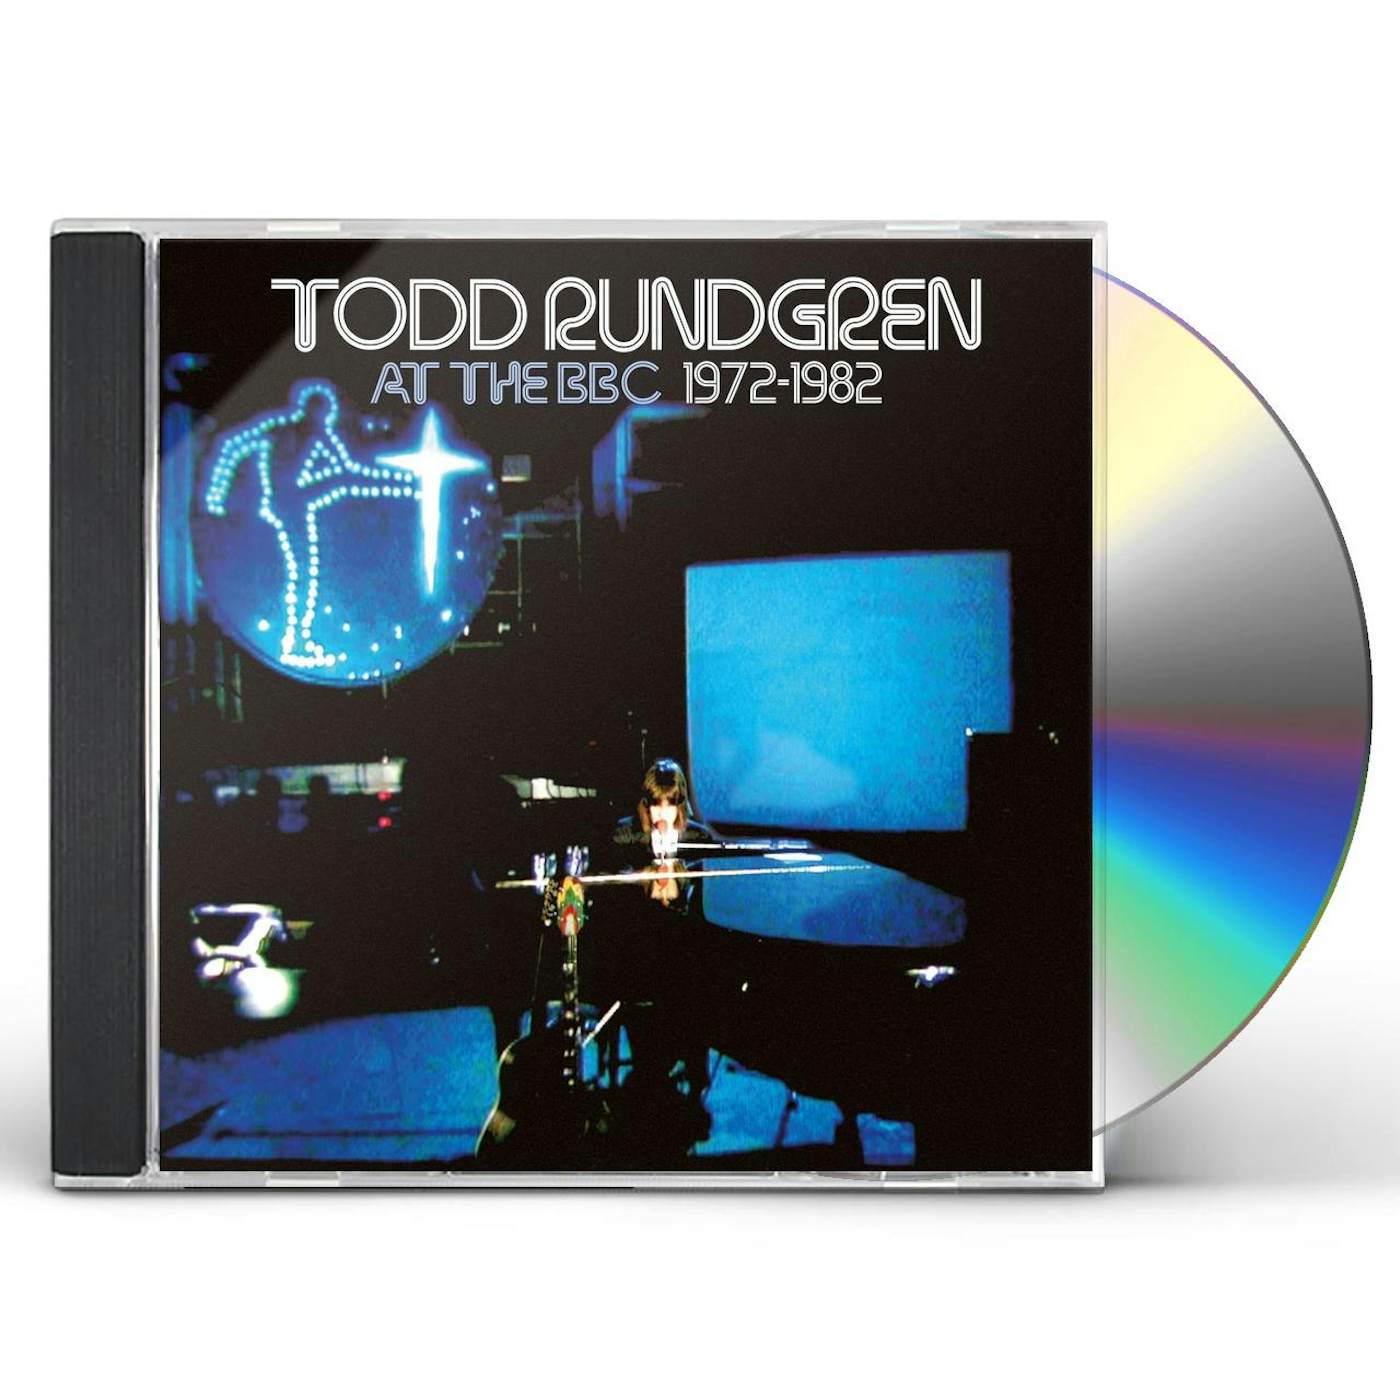 Todd Rundgren AT THE BBC 1972-1982 CD